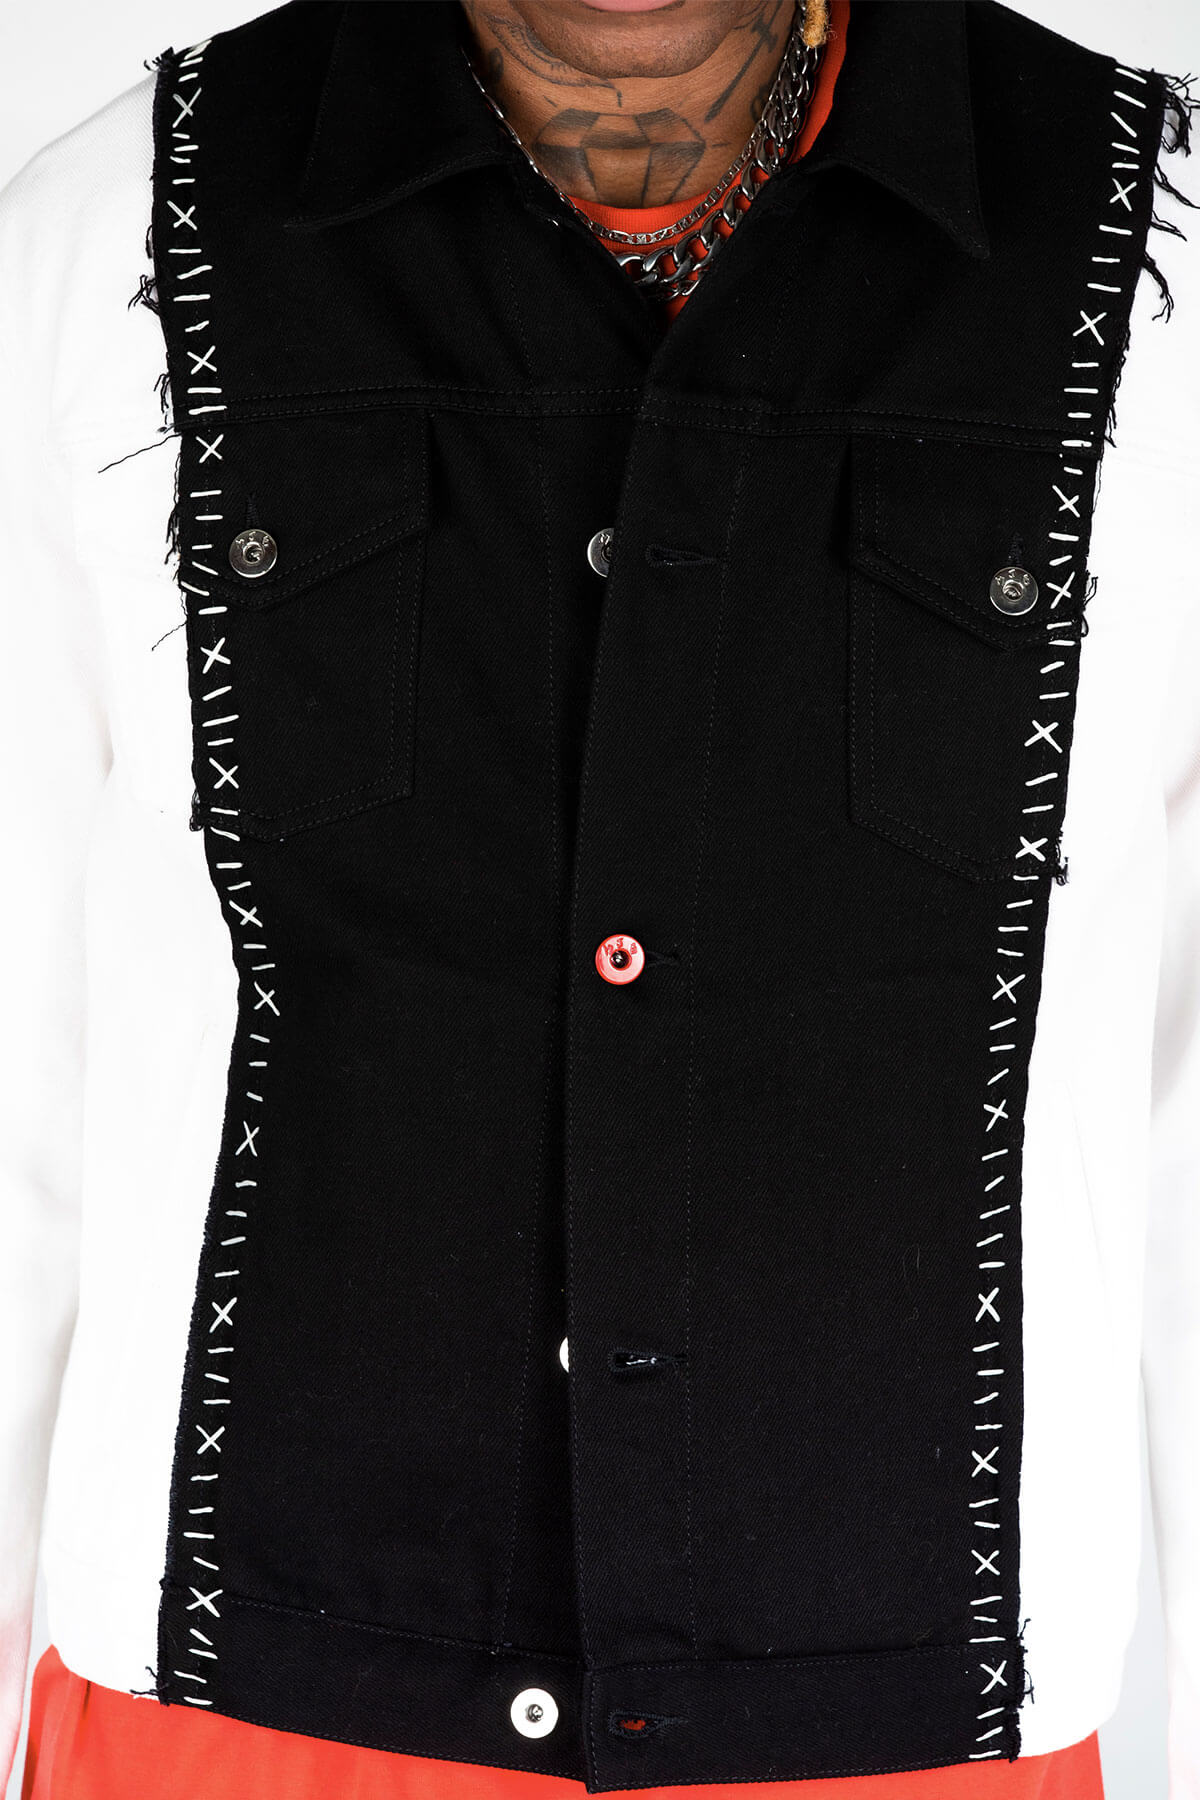 half black half white denim jacket